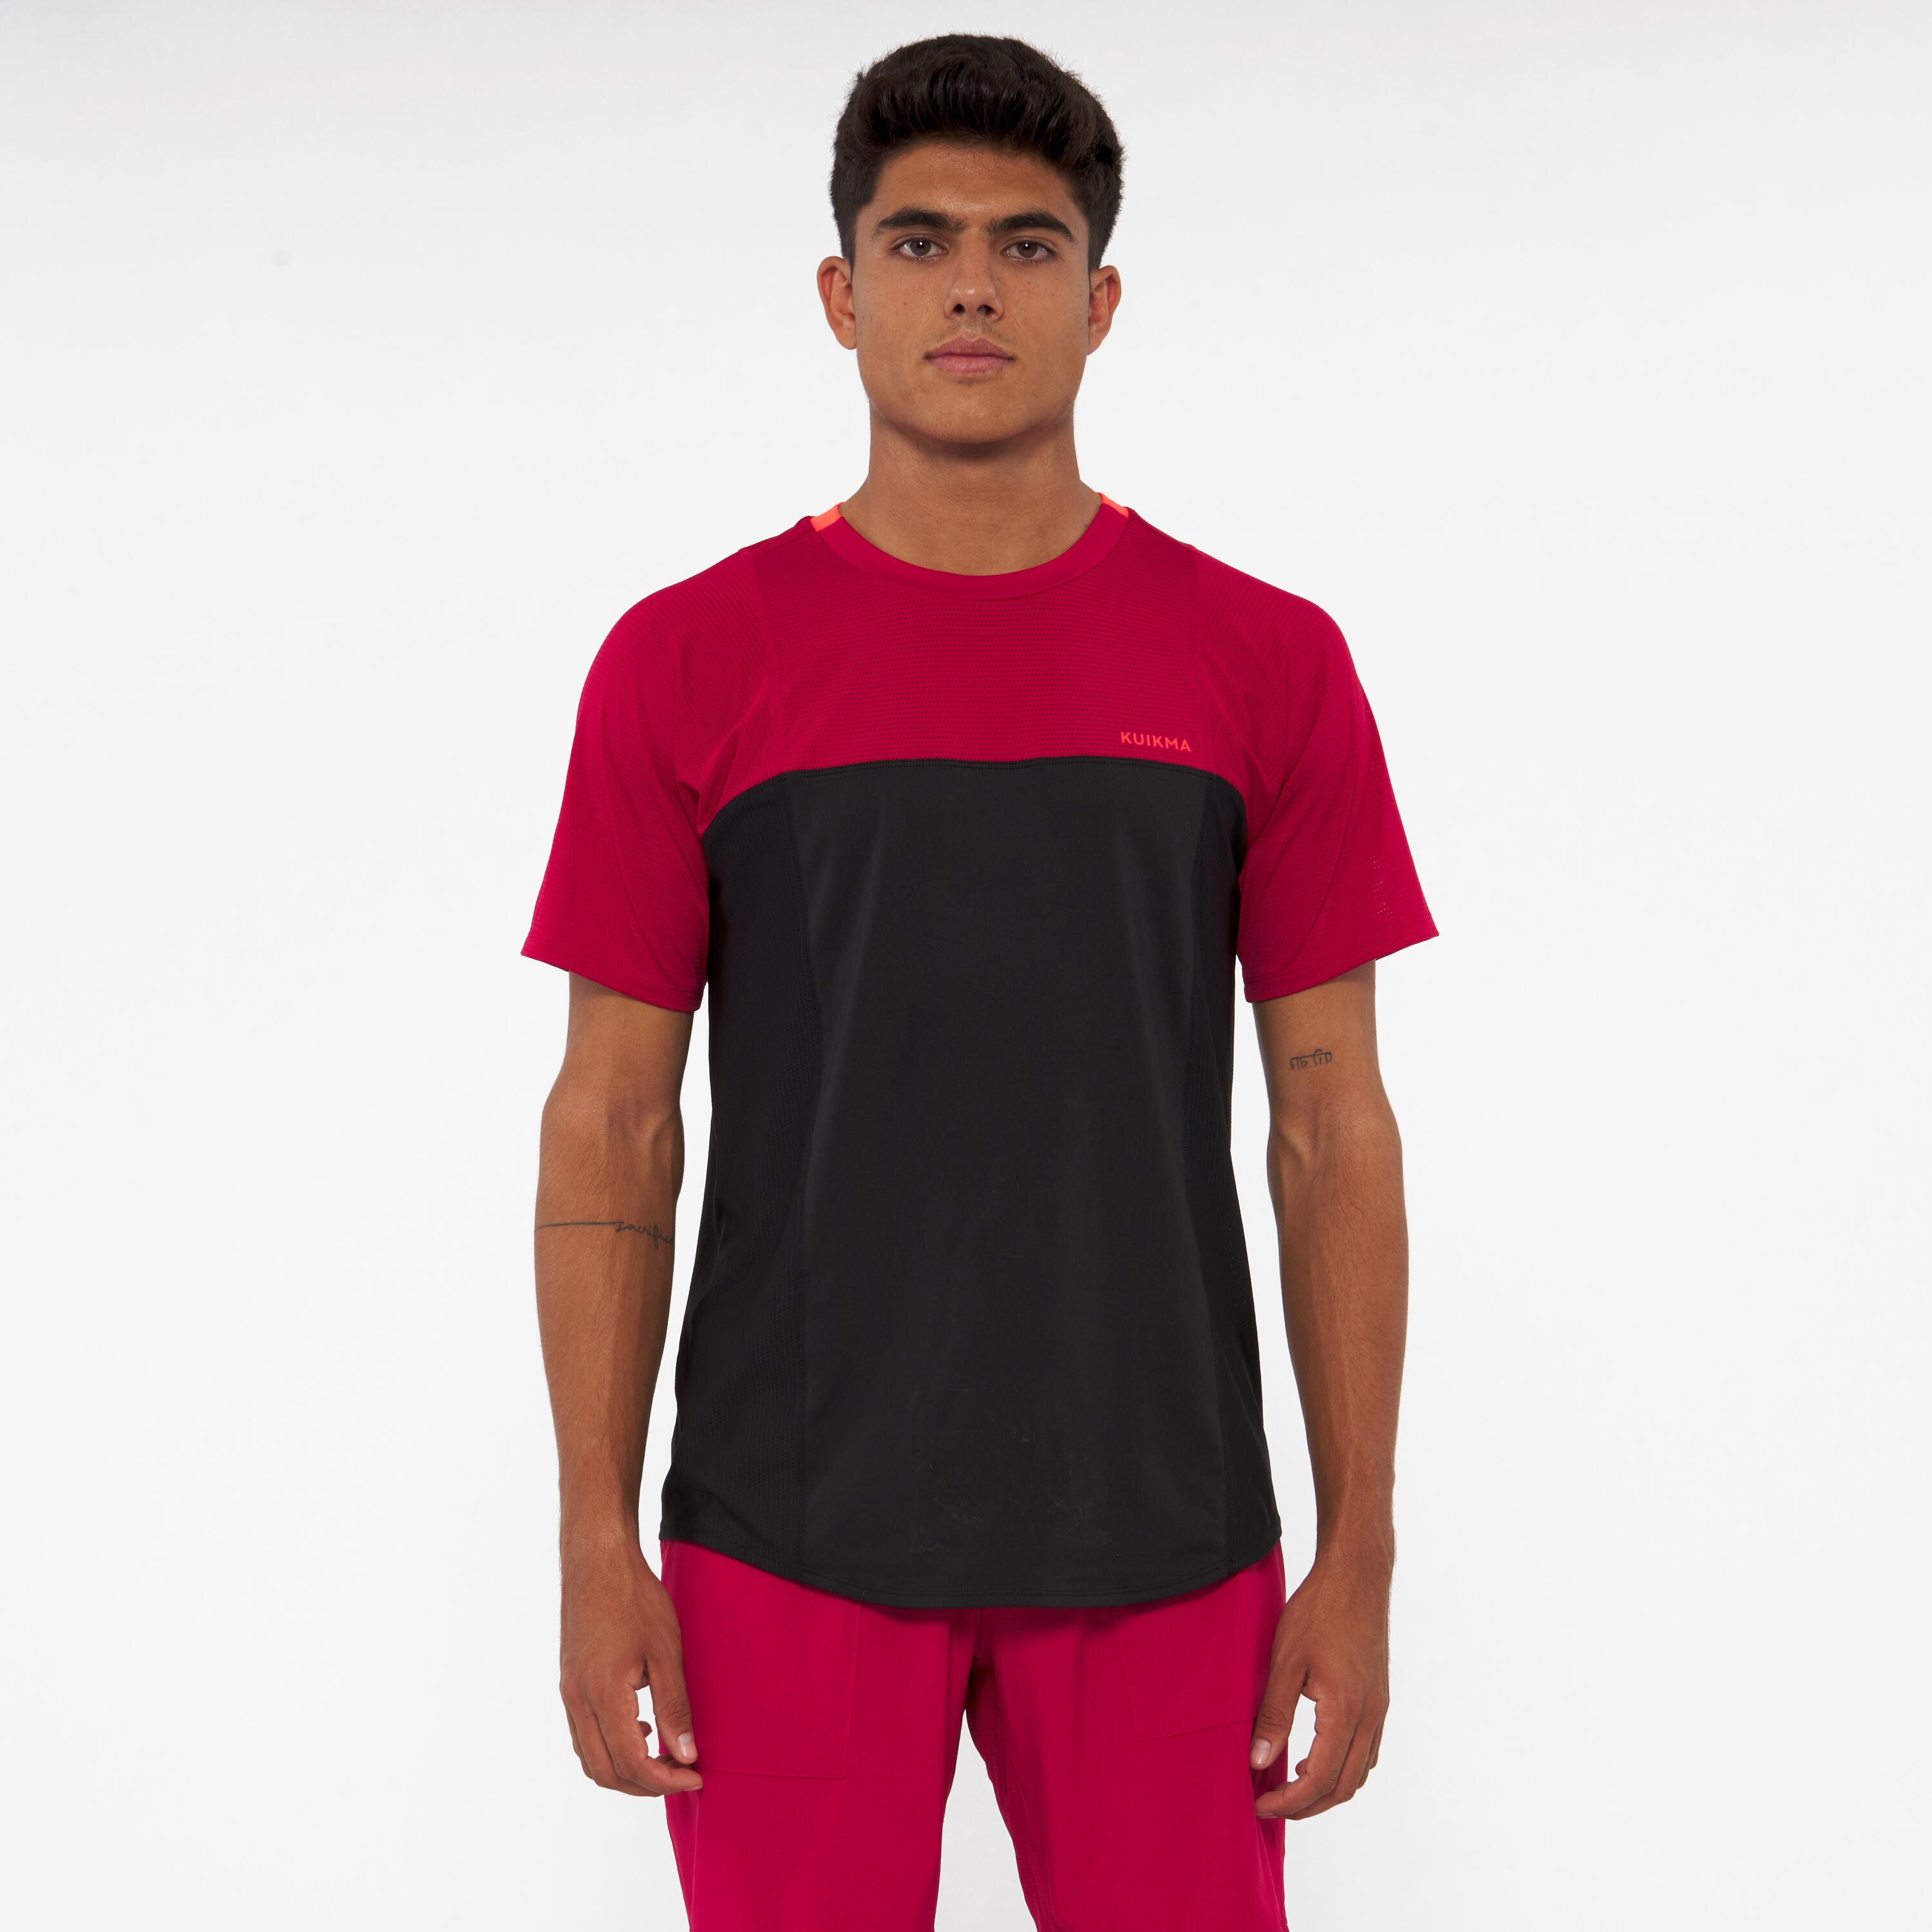 Decathlon | T-shirt padel uomo DRY nero-rosso |  Kuikma